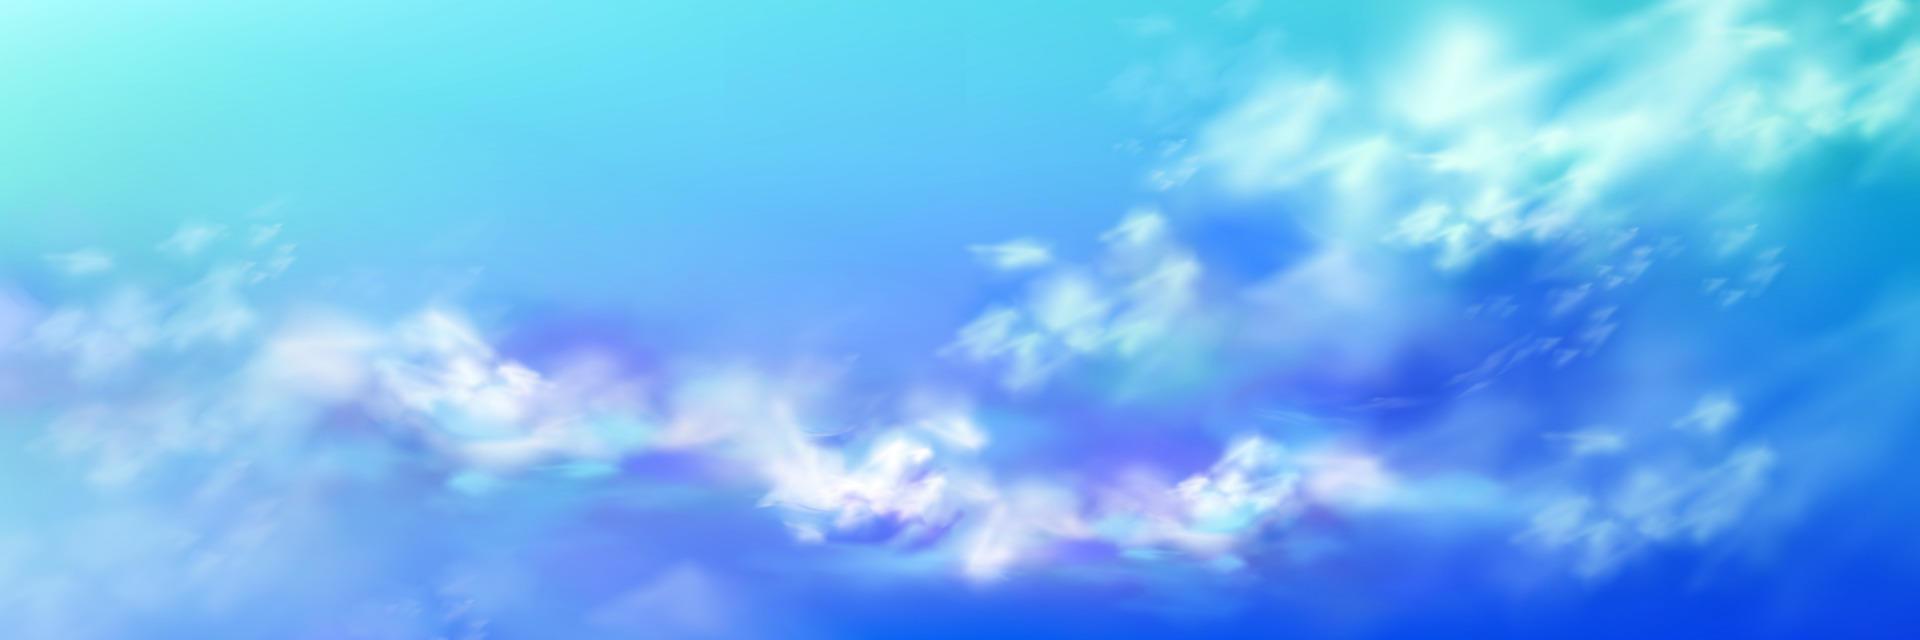 realistisk himmel, blå himmel med vit mjuk moln vektor